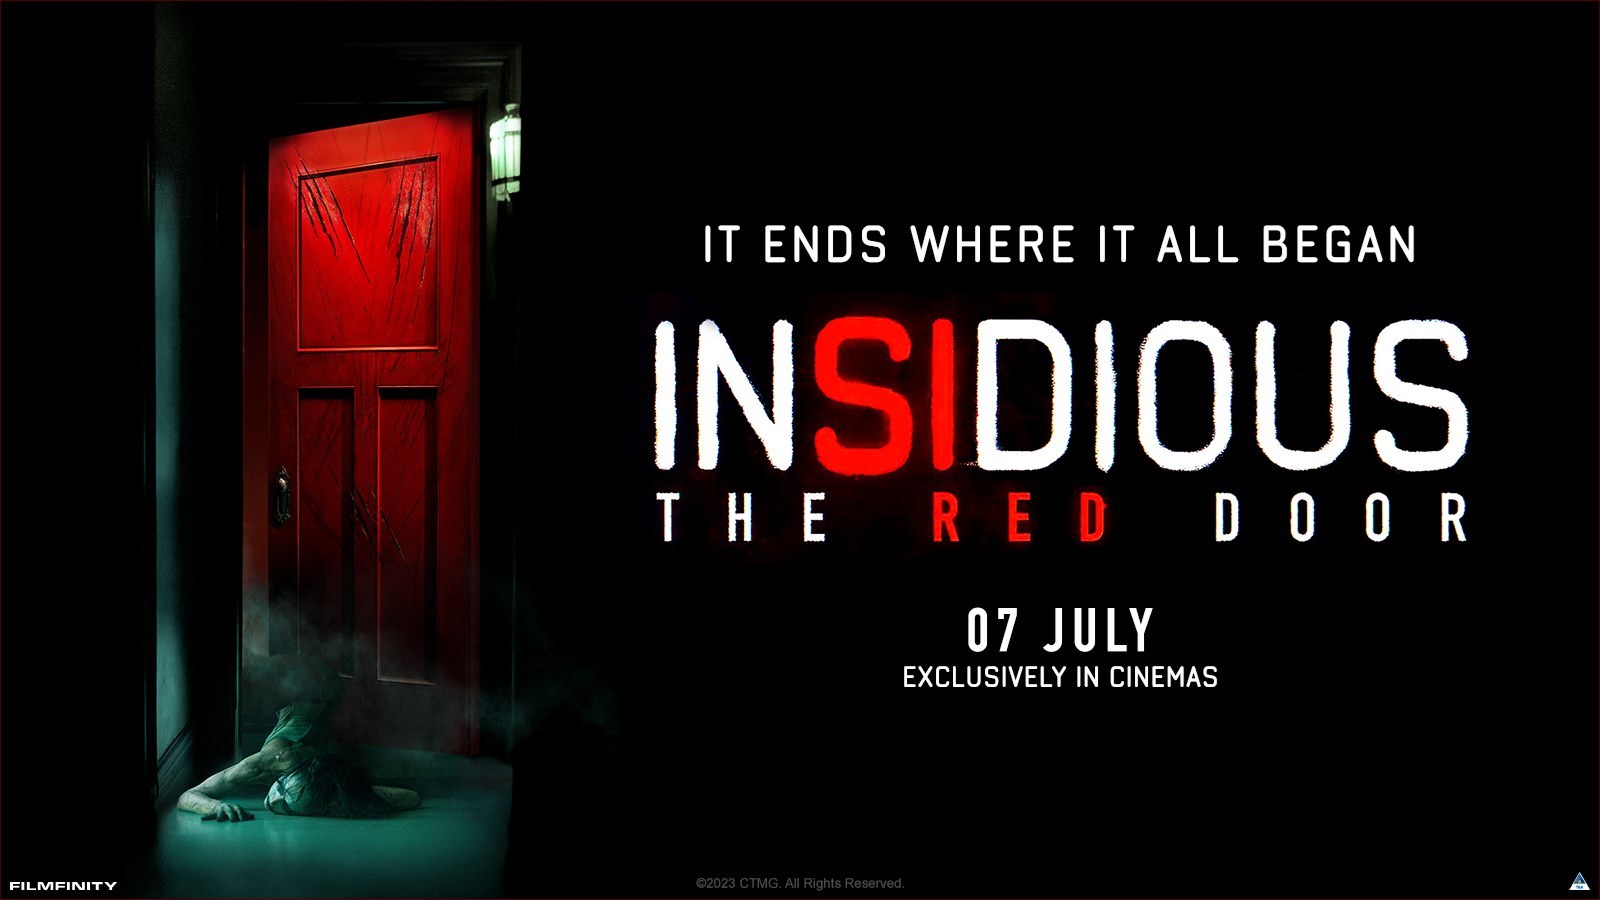 INSIDIOUS: THE RED DOOR